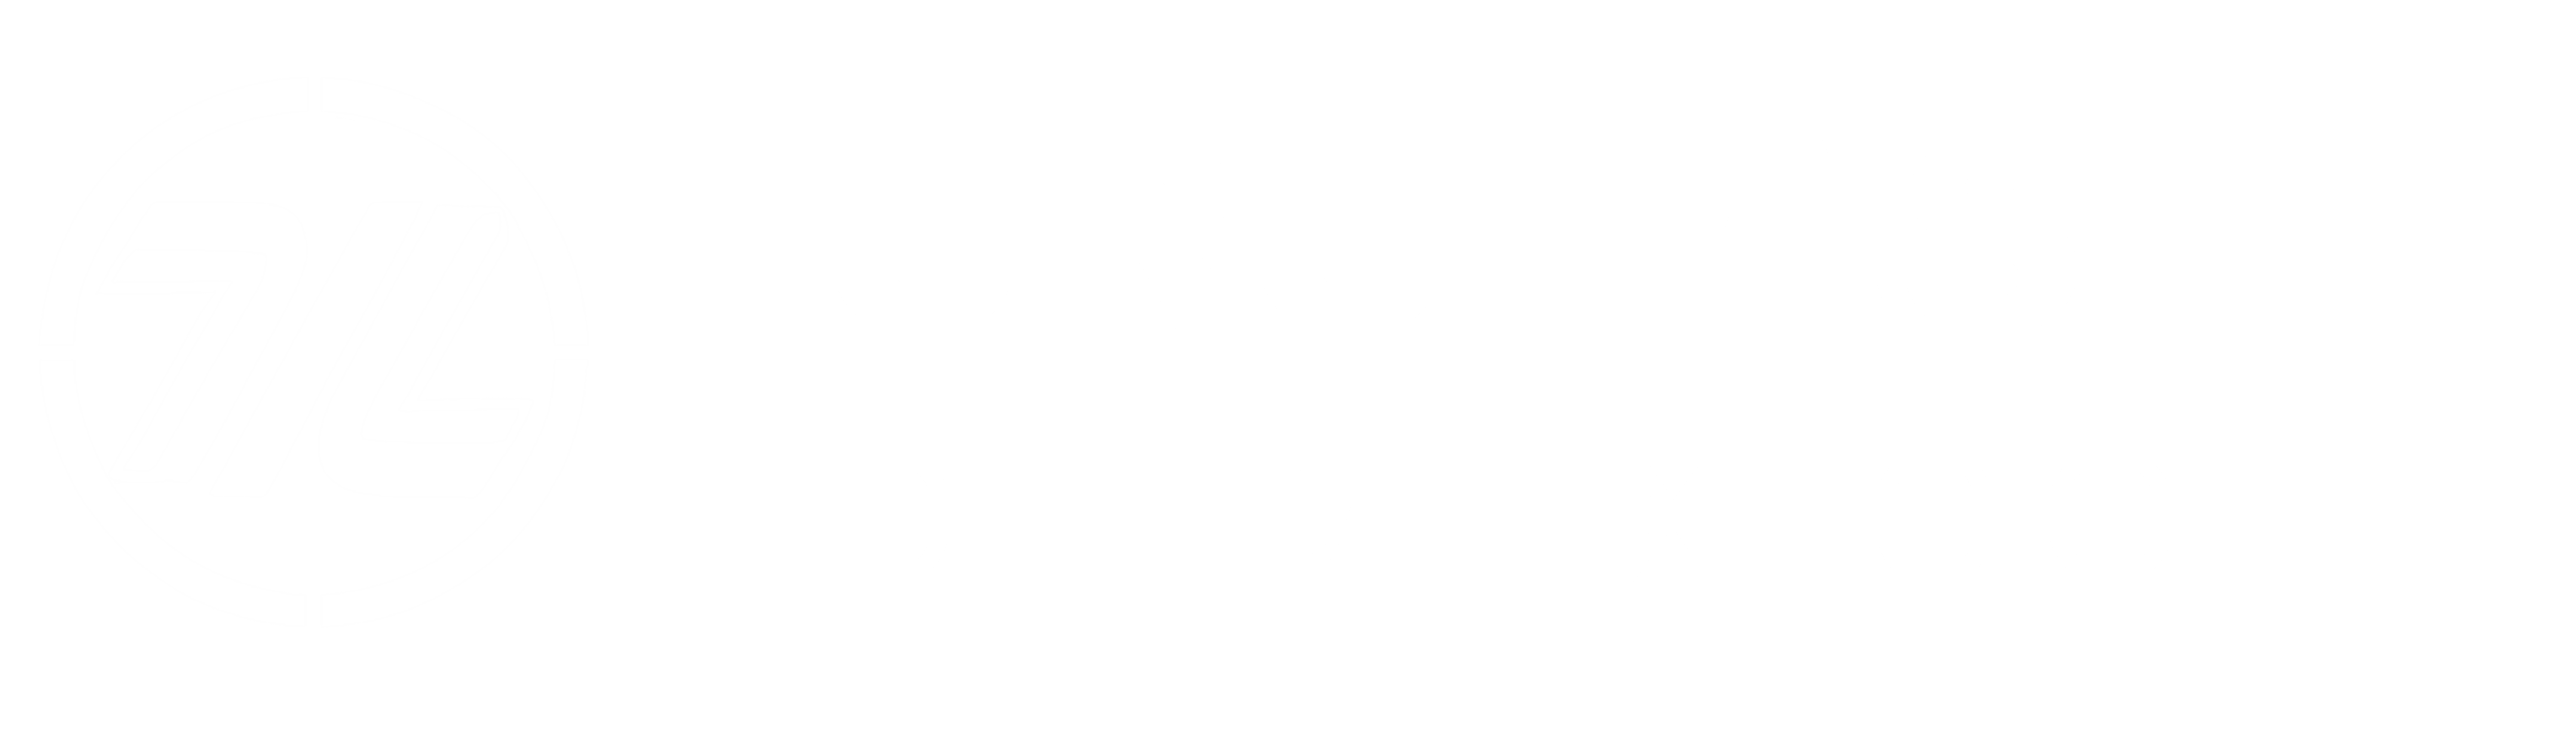 FURUHASHI DE MEXICO